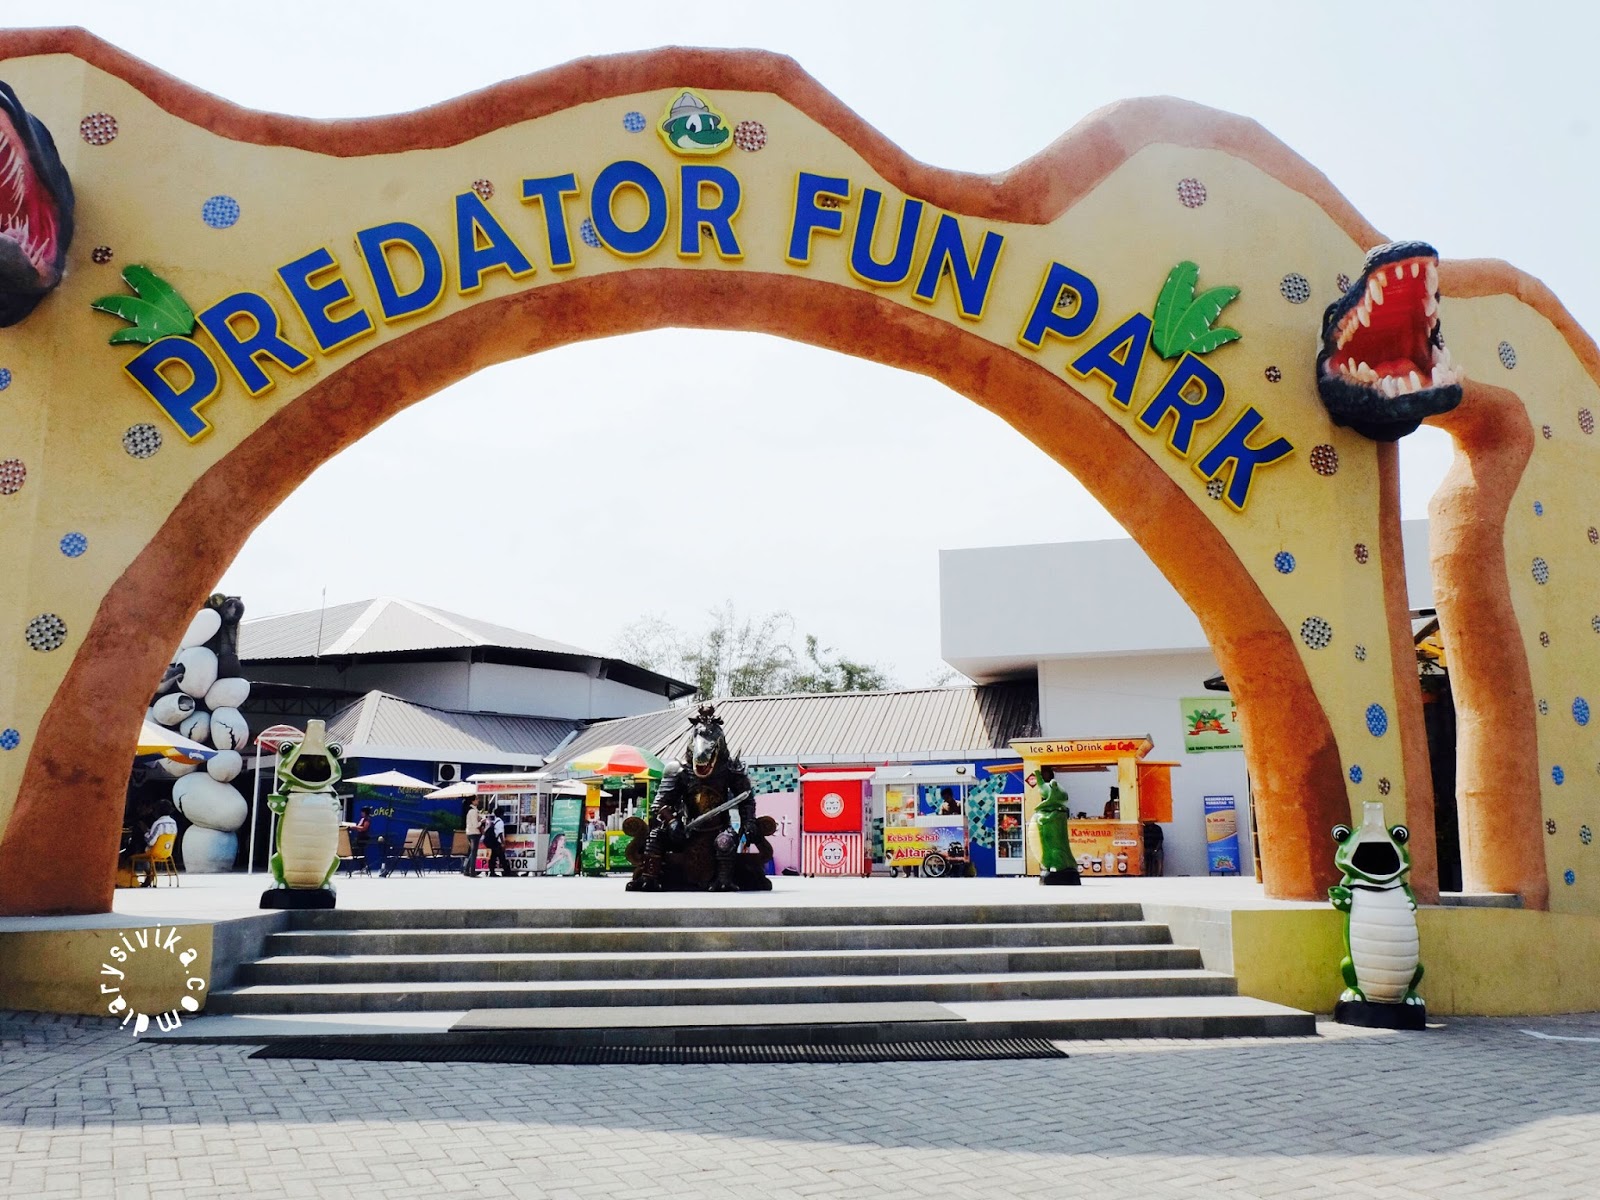 Predator fun park jam operasional